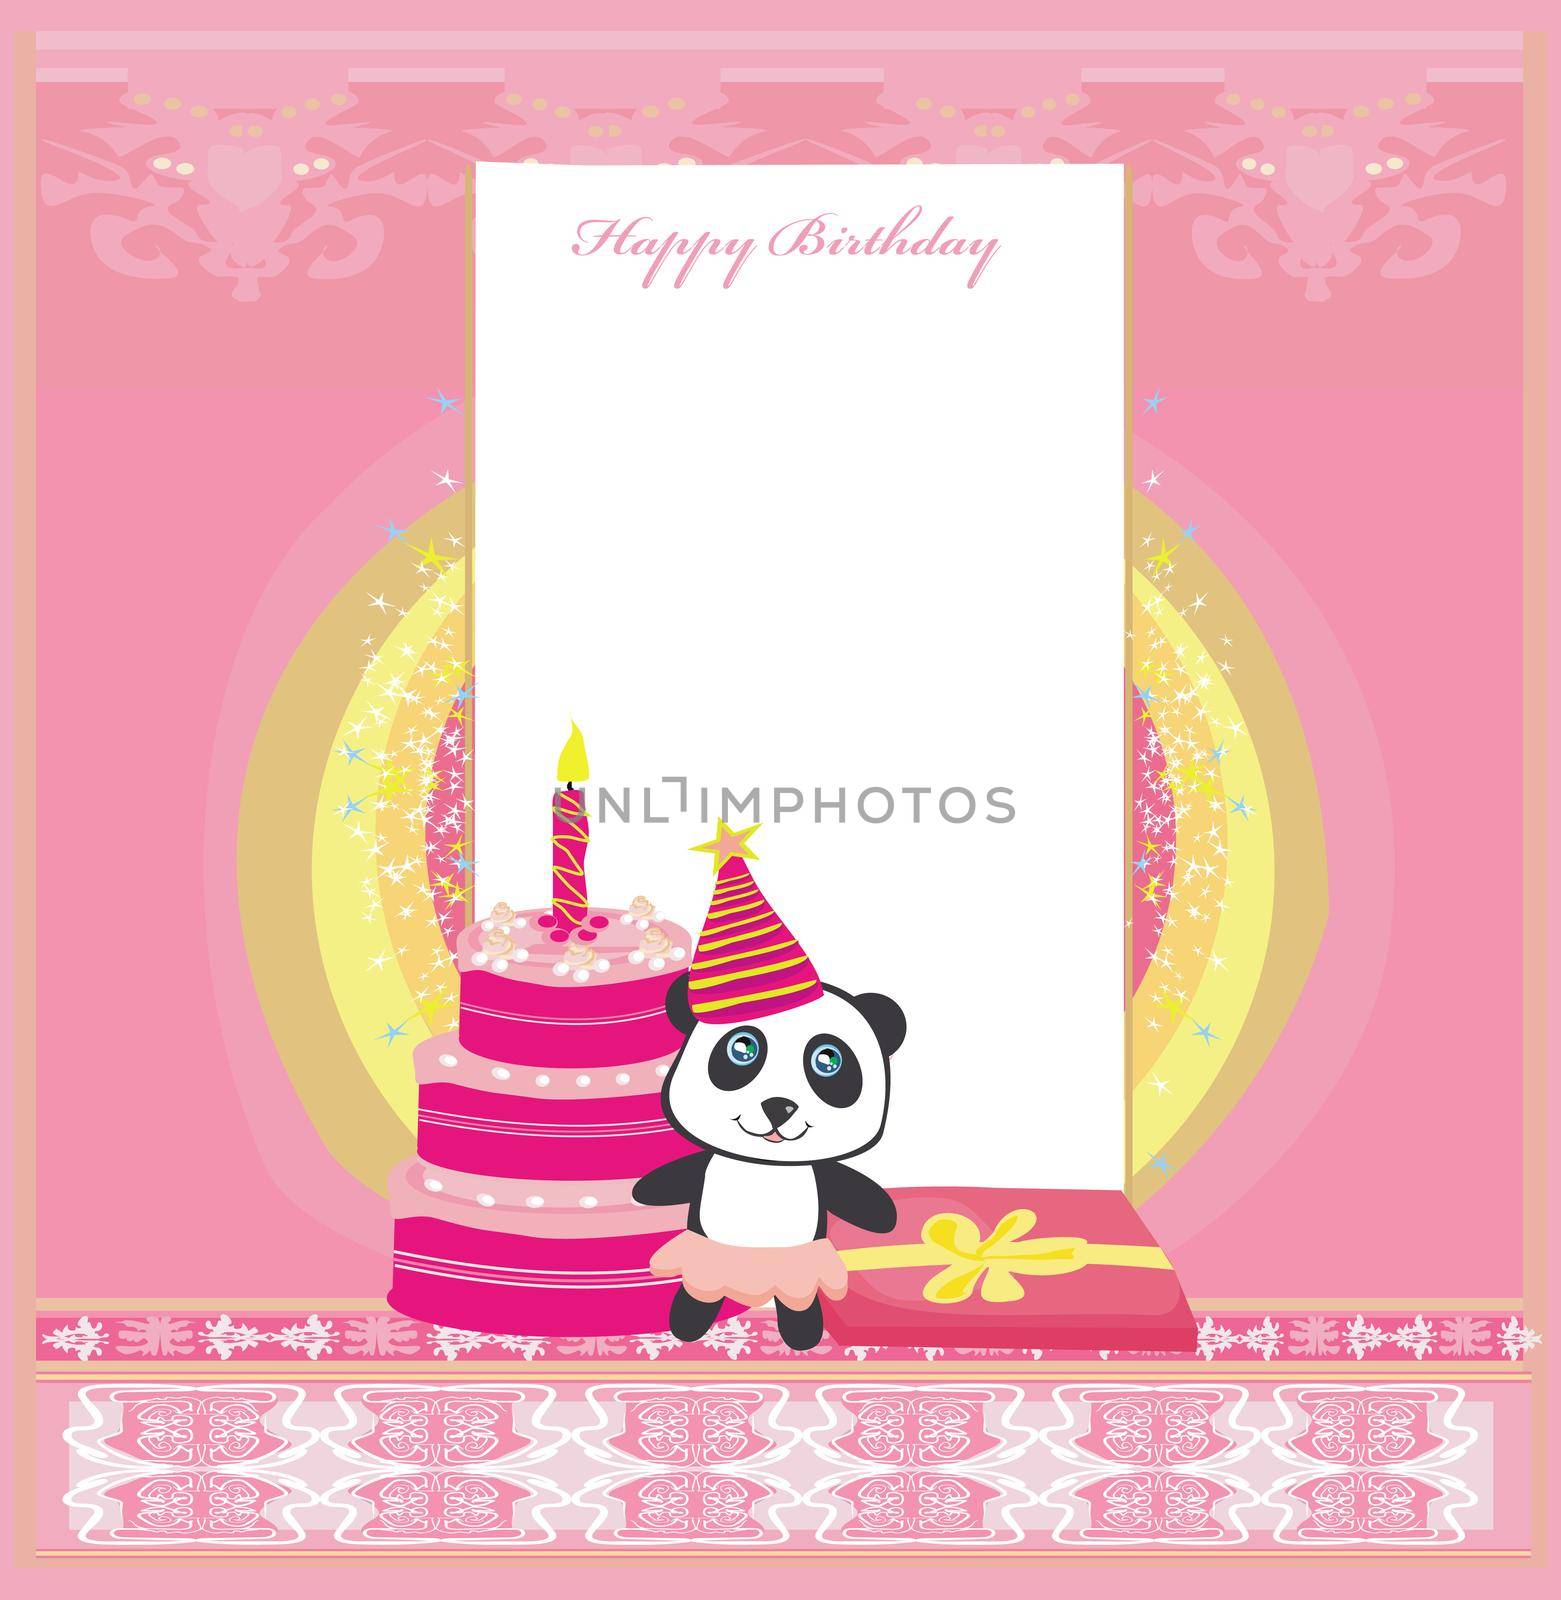 Happy Birthday Card, girlish invitation with cute panda